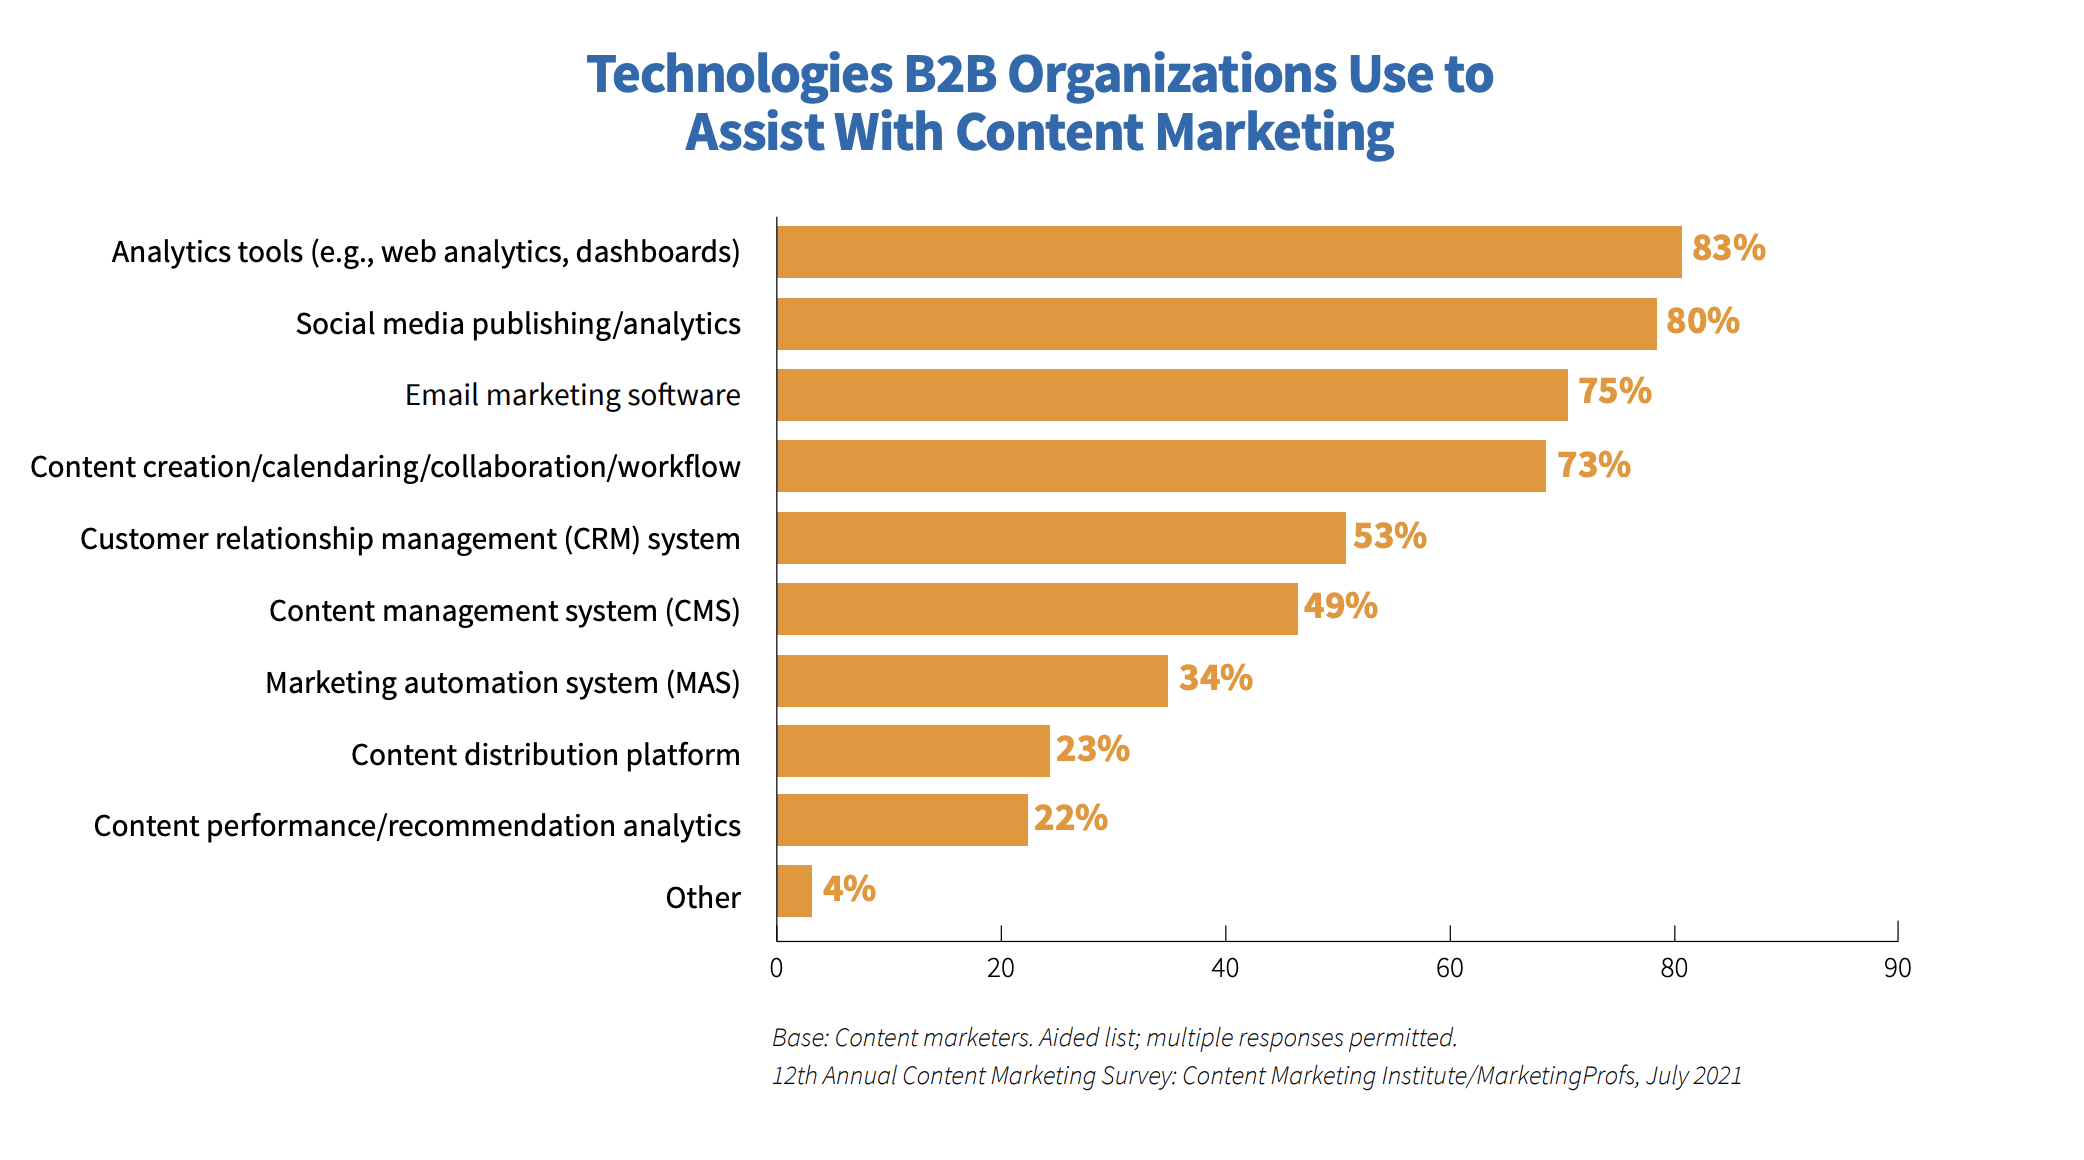 Technologies B2B Organizations Use for Content Marketing